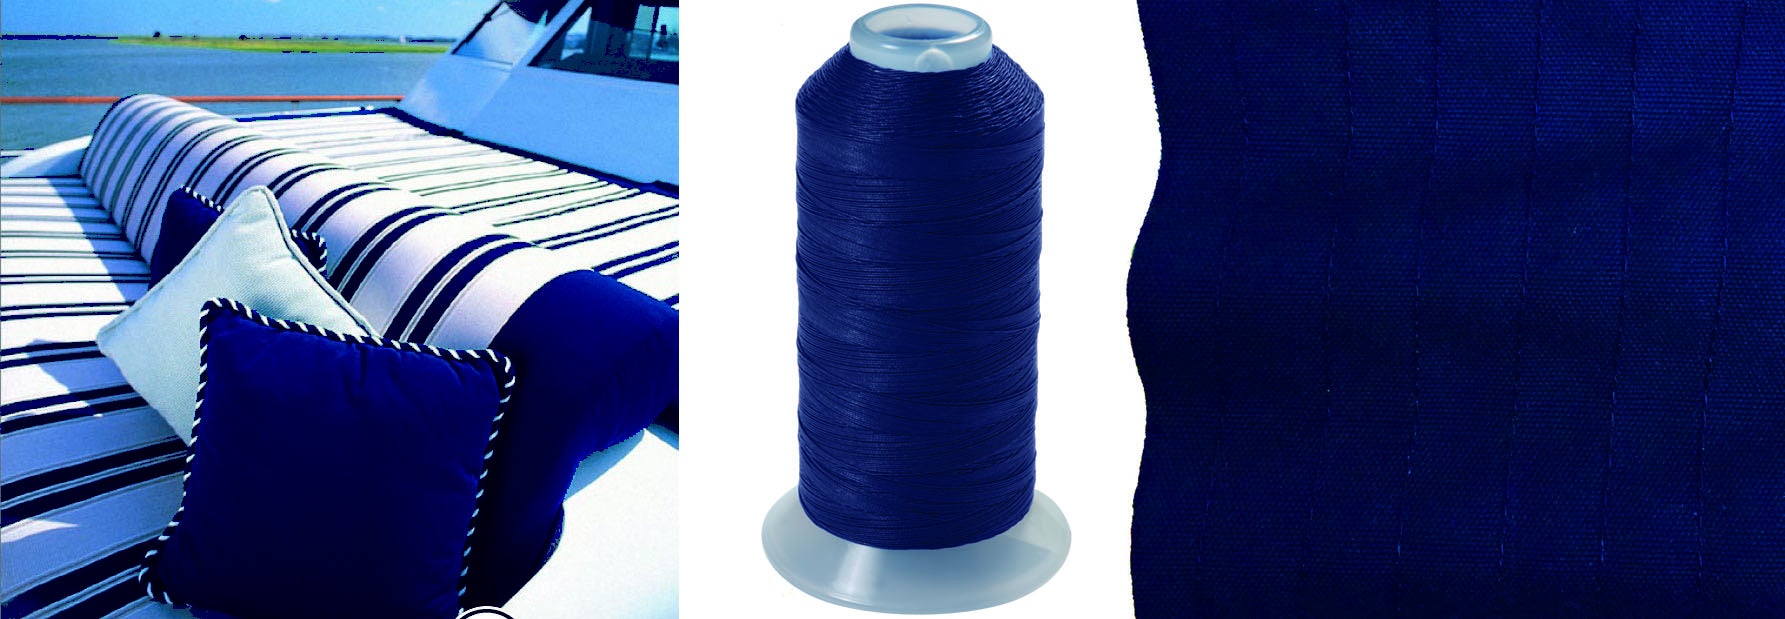 New Navy Blue GORE TENARA Sewing Thread